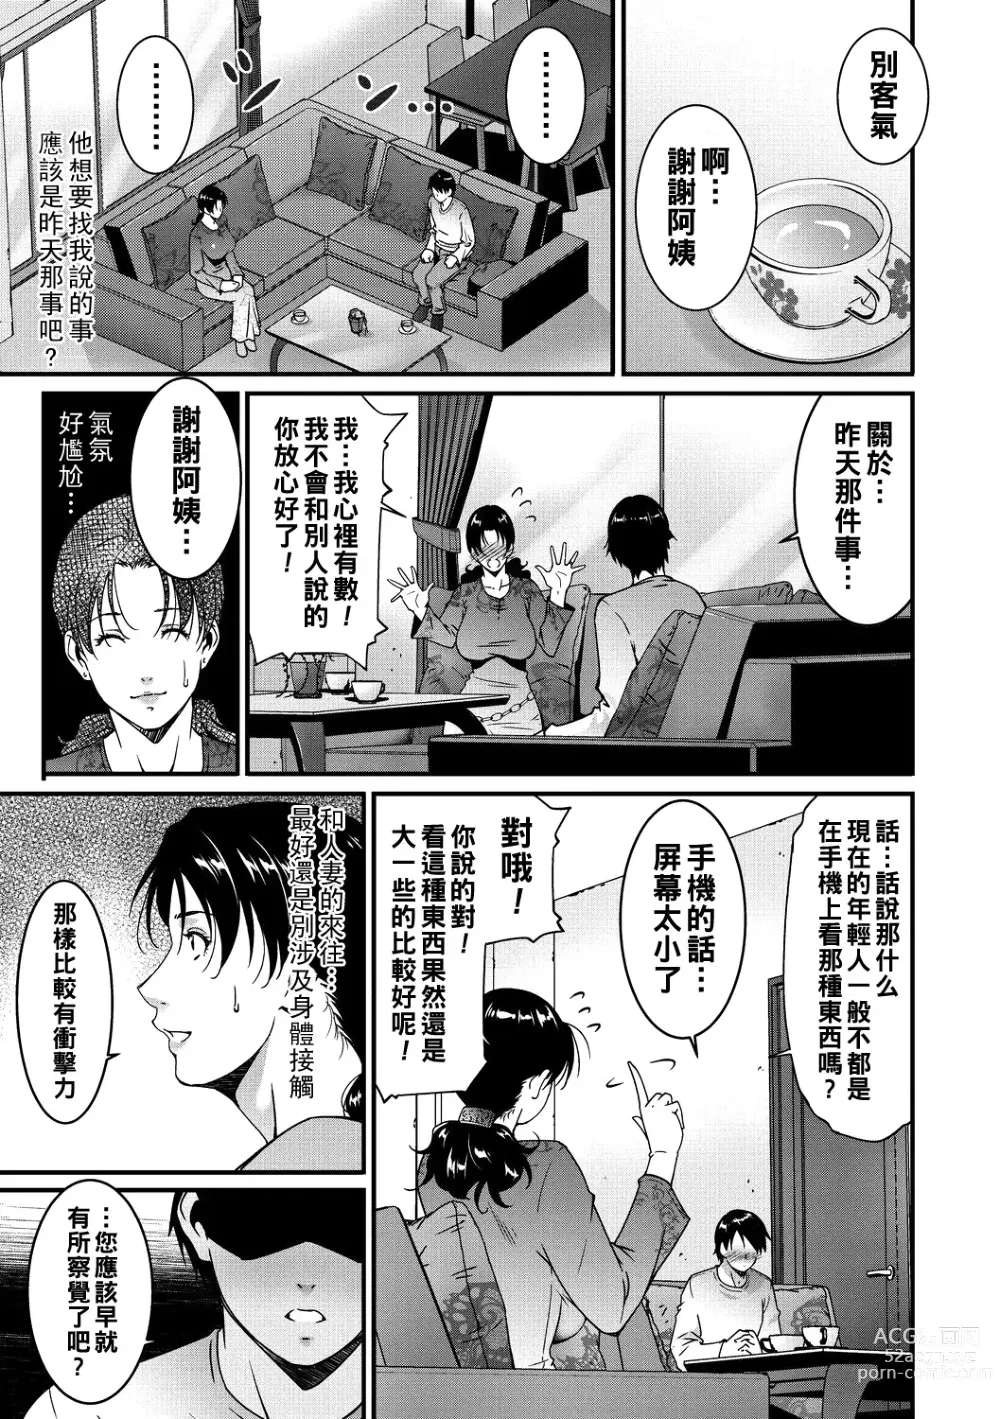 Page 3 of manga Jukubo no Enjou